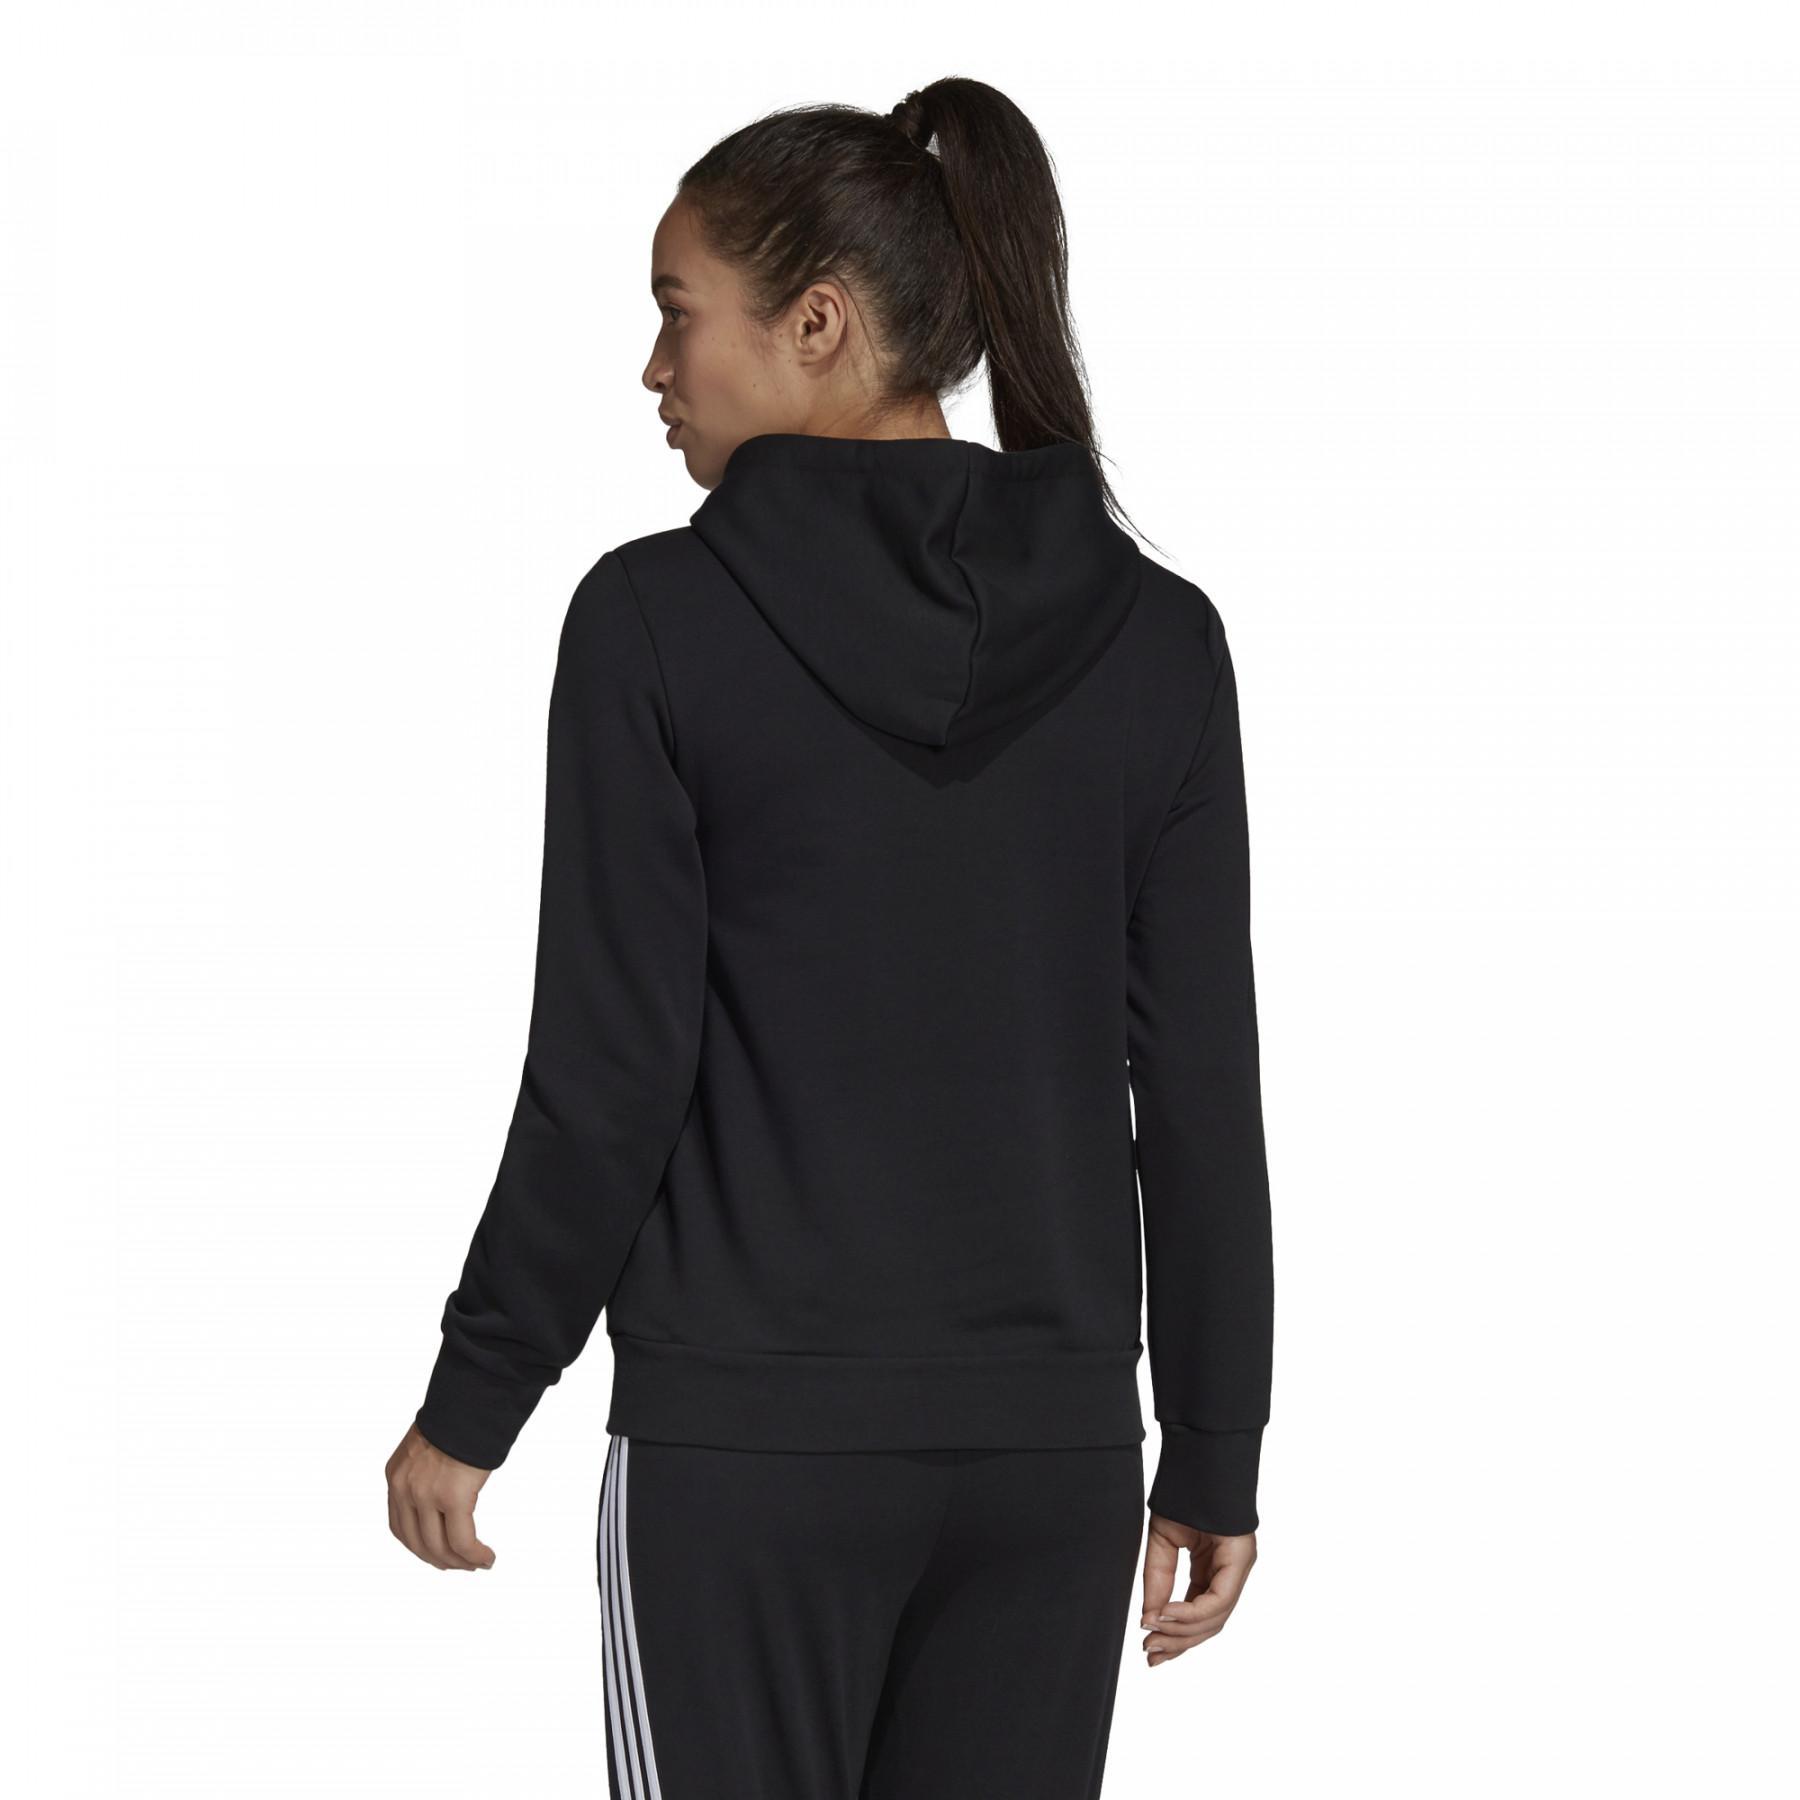 Women's hoodie adidas Essentials Linear